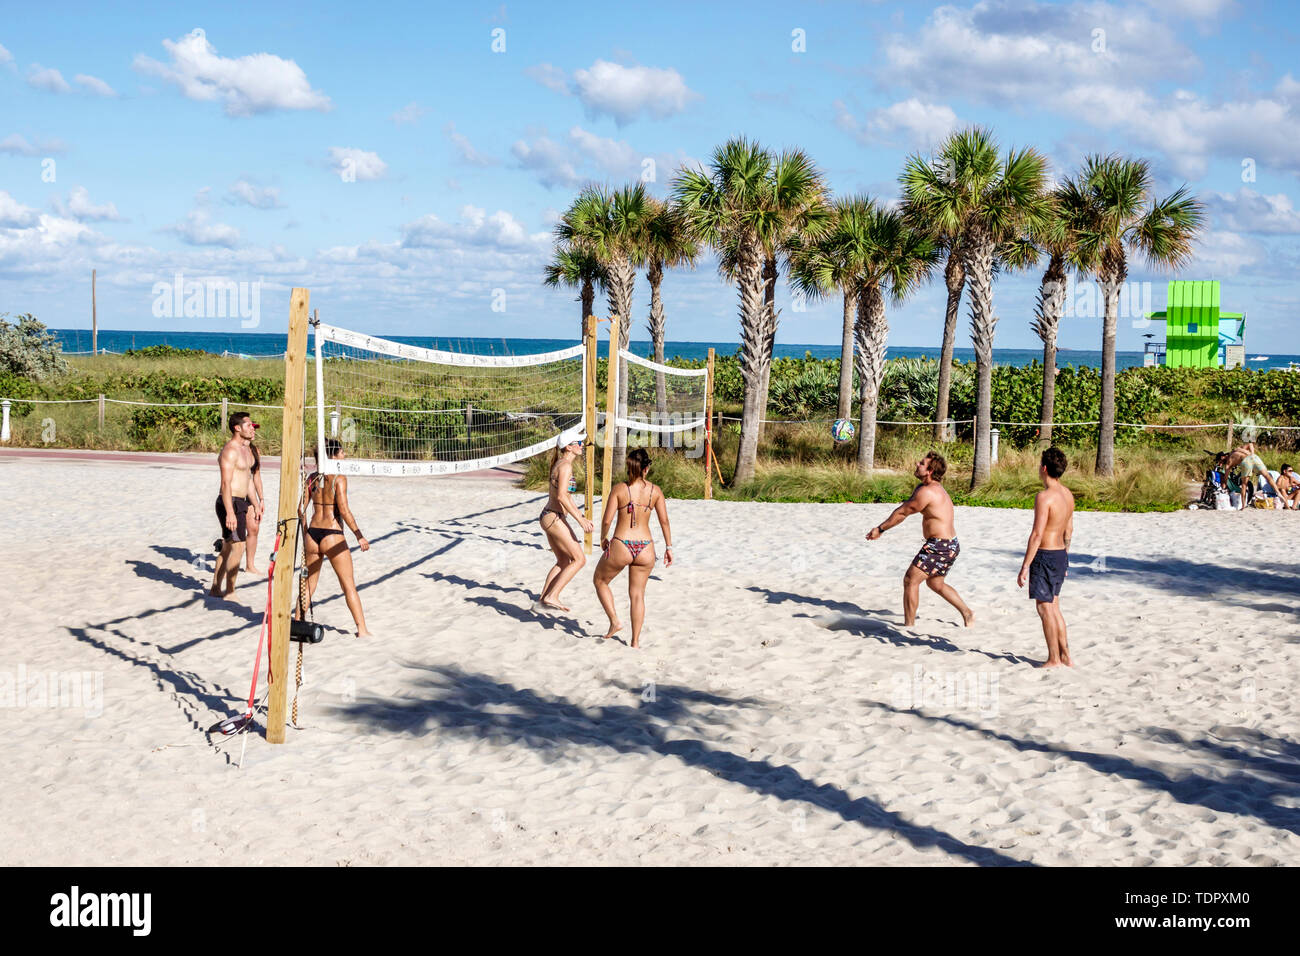 Miami Beach Florida,North Beach,beach volleyball court,sand,playing man,woman female women,young adult,bathing suit,bikini,body image,FL190104063 Stock Photo